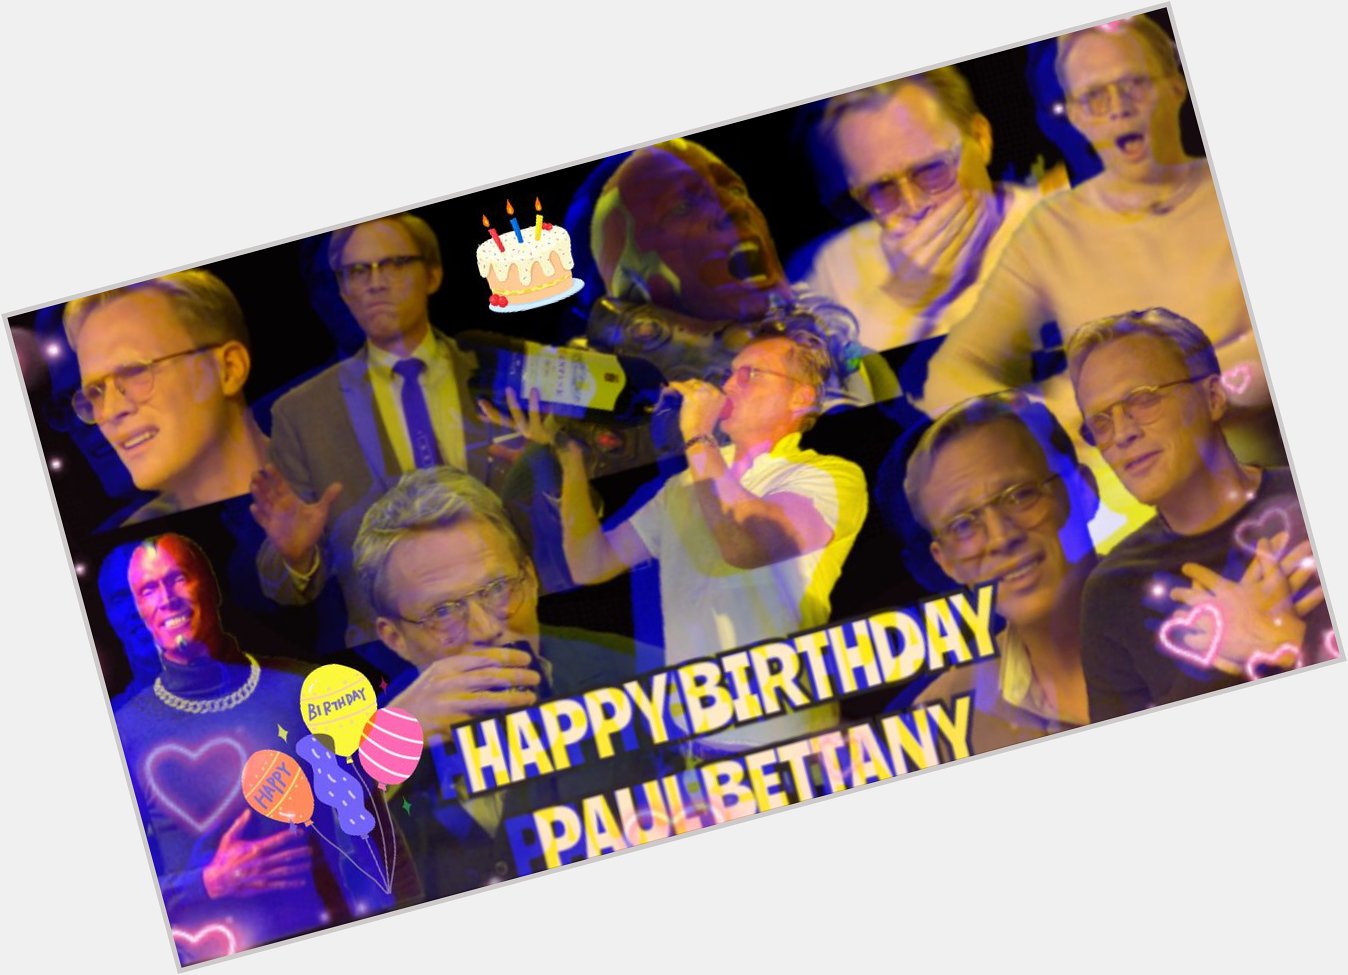 HAPPY  BIRTHDAY PAUL BETTANY            TKM, sos genial Sr Bettany 